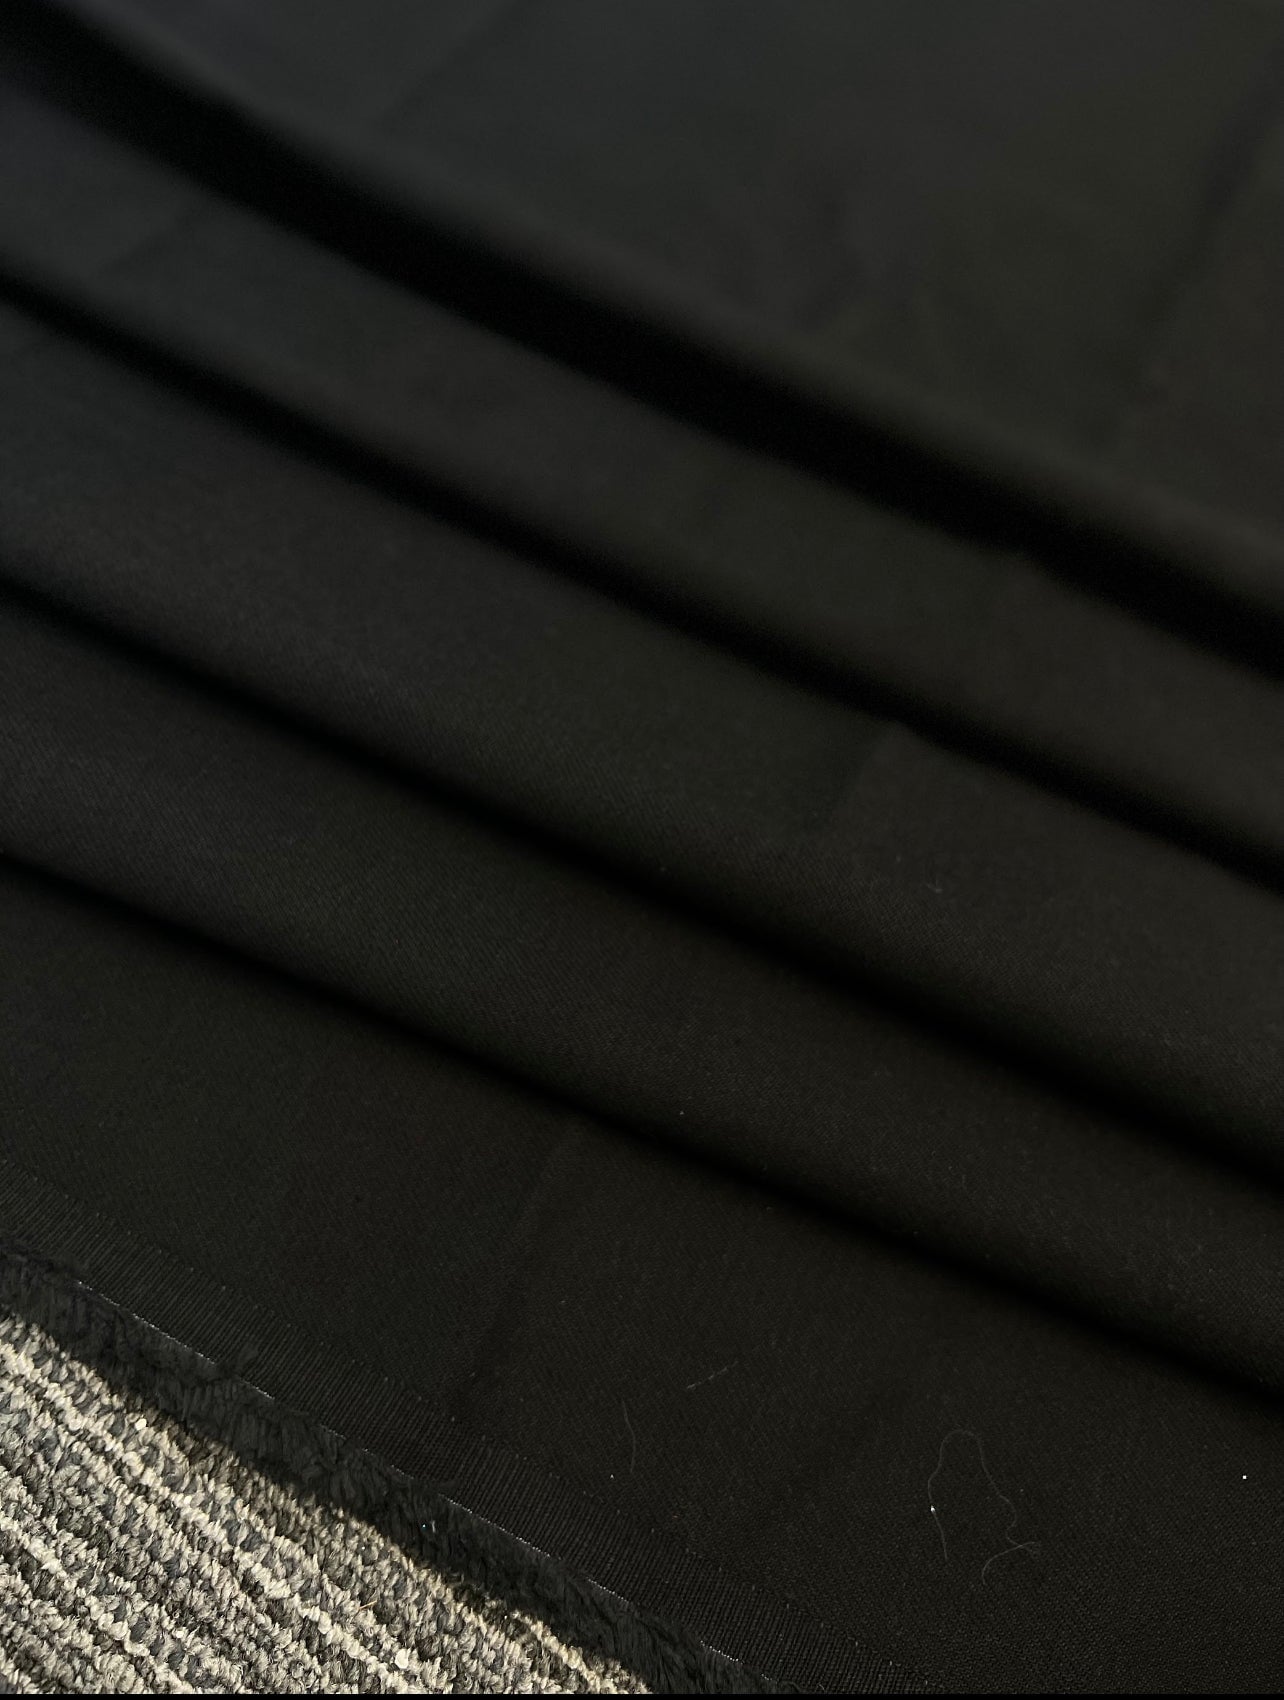 black Stretch Denim fabric for apparel, black Denim Fabric by the yard, black Washed Denim Fabric Medium Weight, black Jeans Fabric, jeans fabric for man, jeans fabric for woman, jeans for party wear, jeans for outdoor